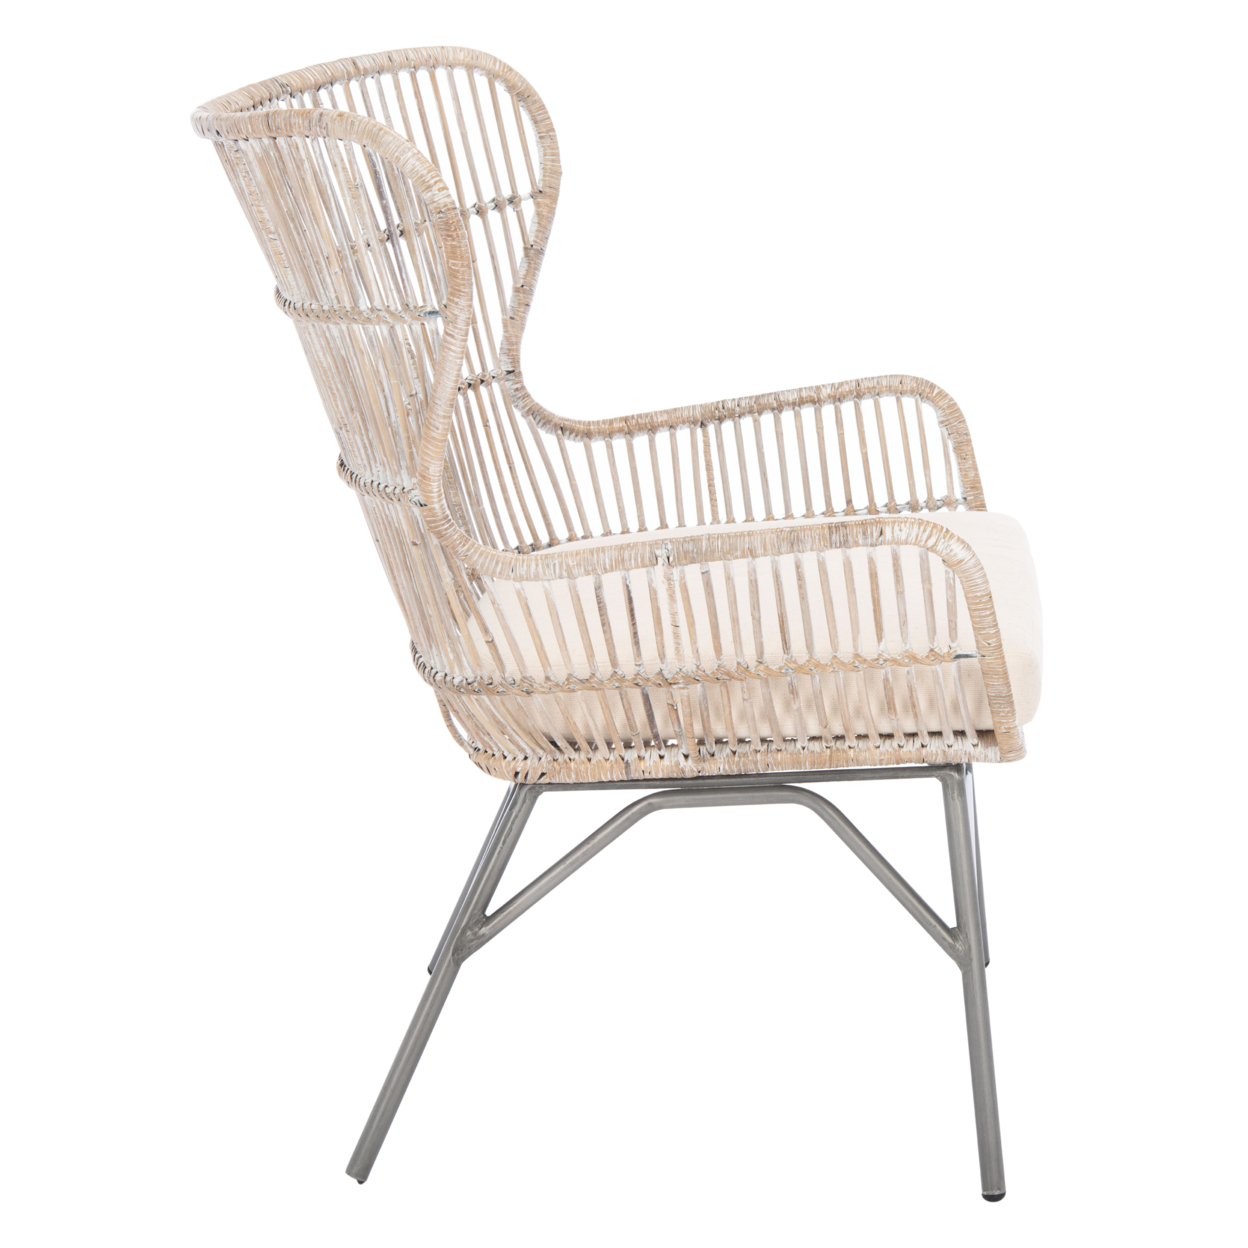 SAFAVIEH Lenu Rattan Accent Chair With Cushion Grey White Wash / Black